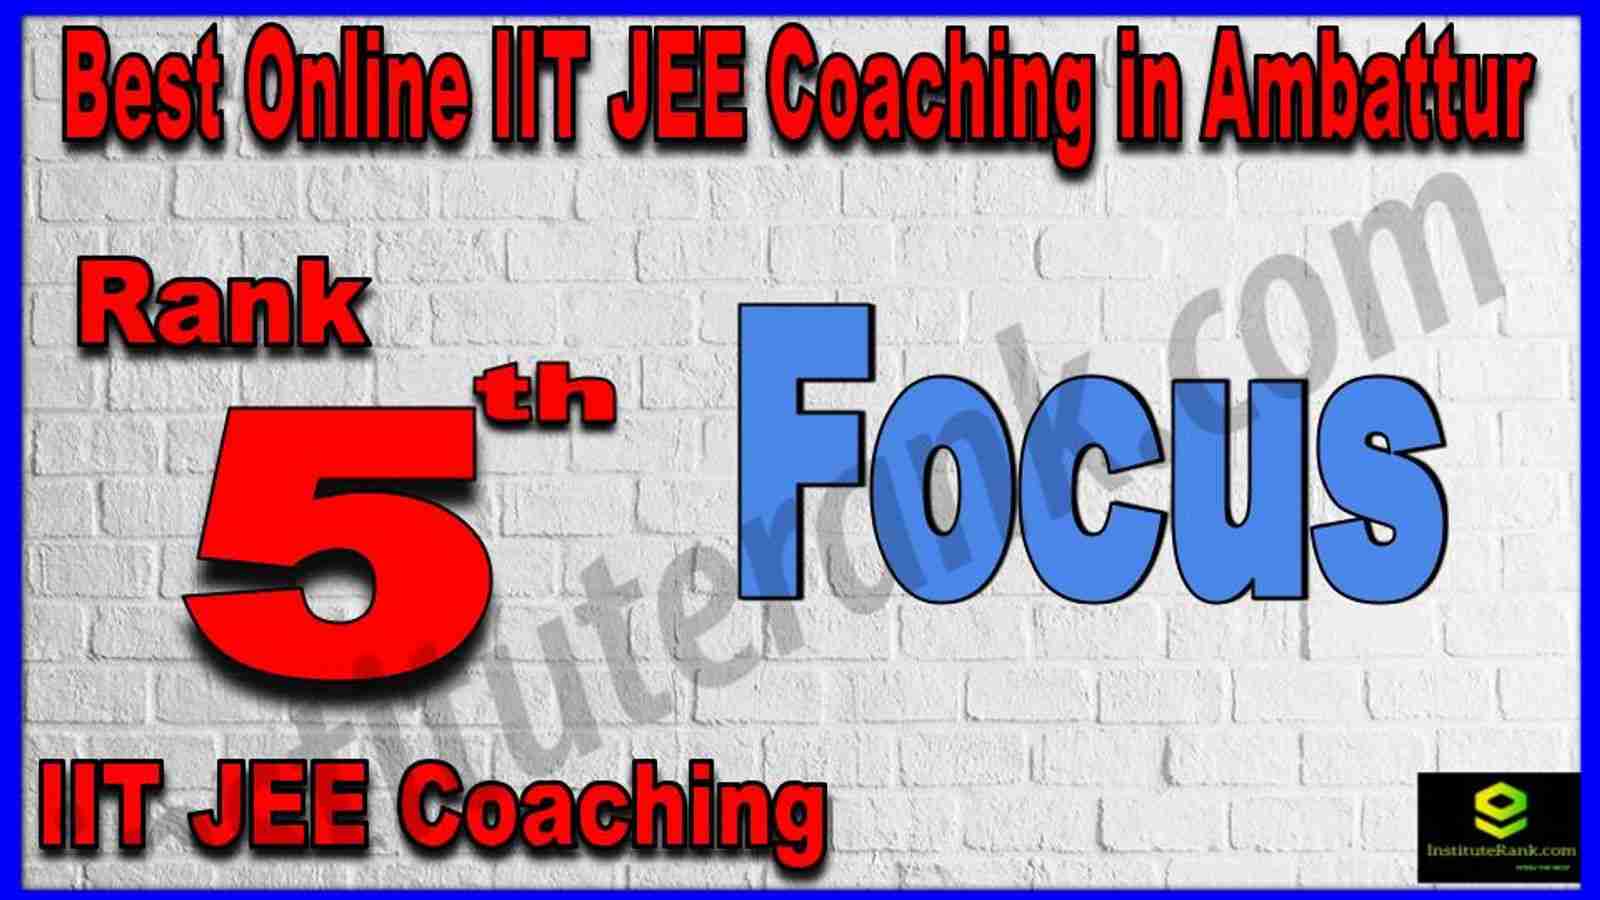 Rank 5th Best Online IIT-JEE Coaching in Ambattur